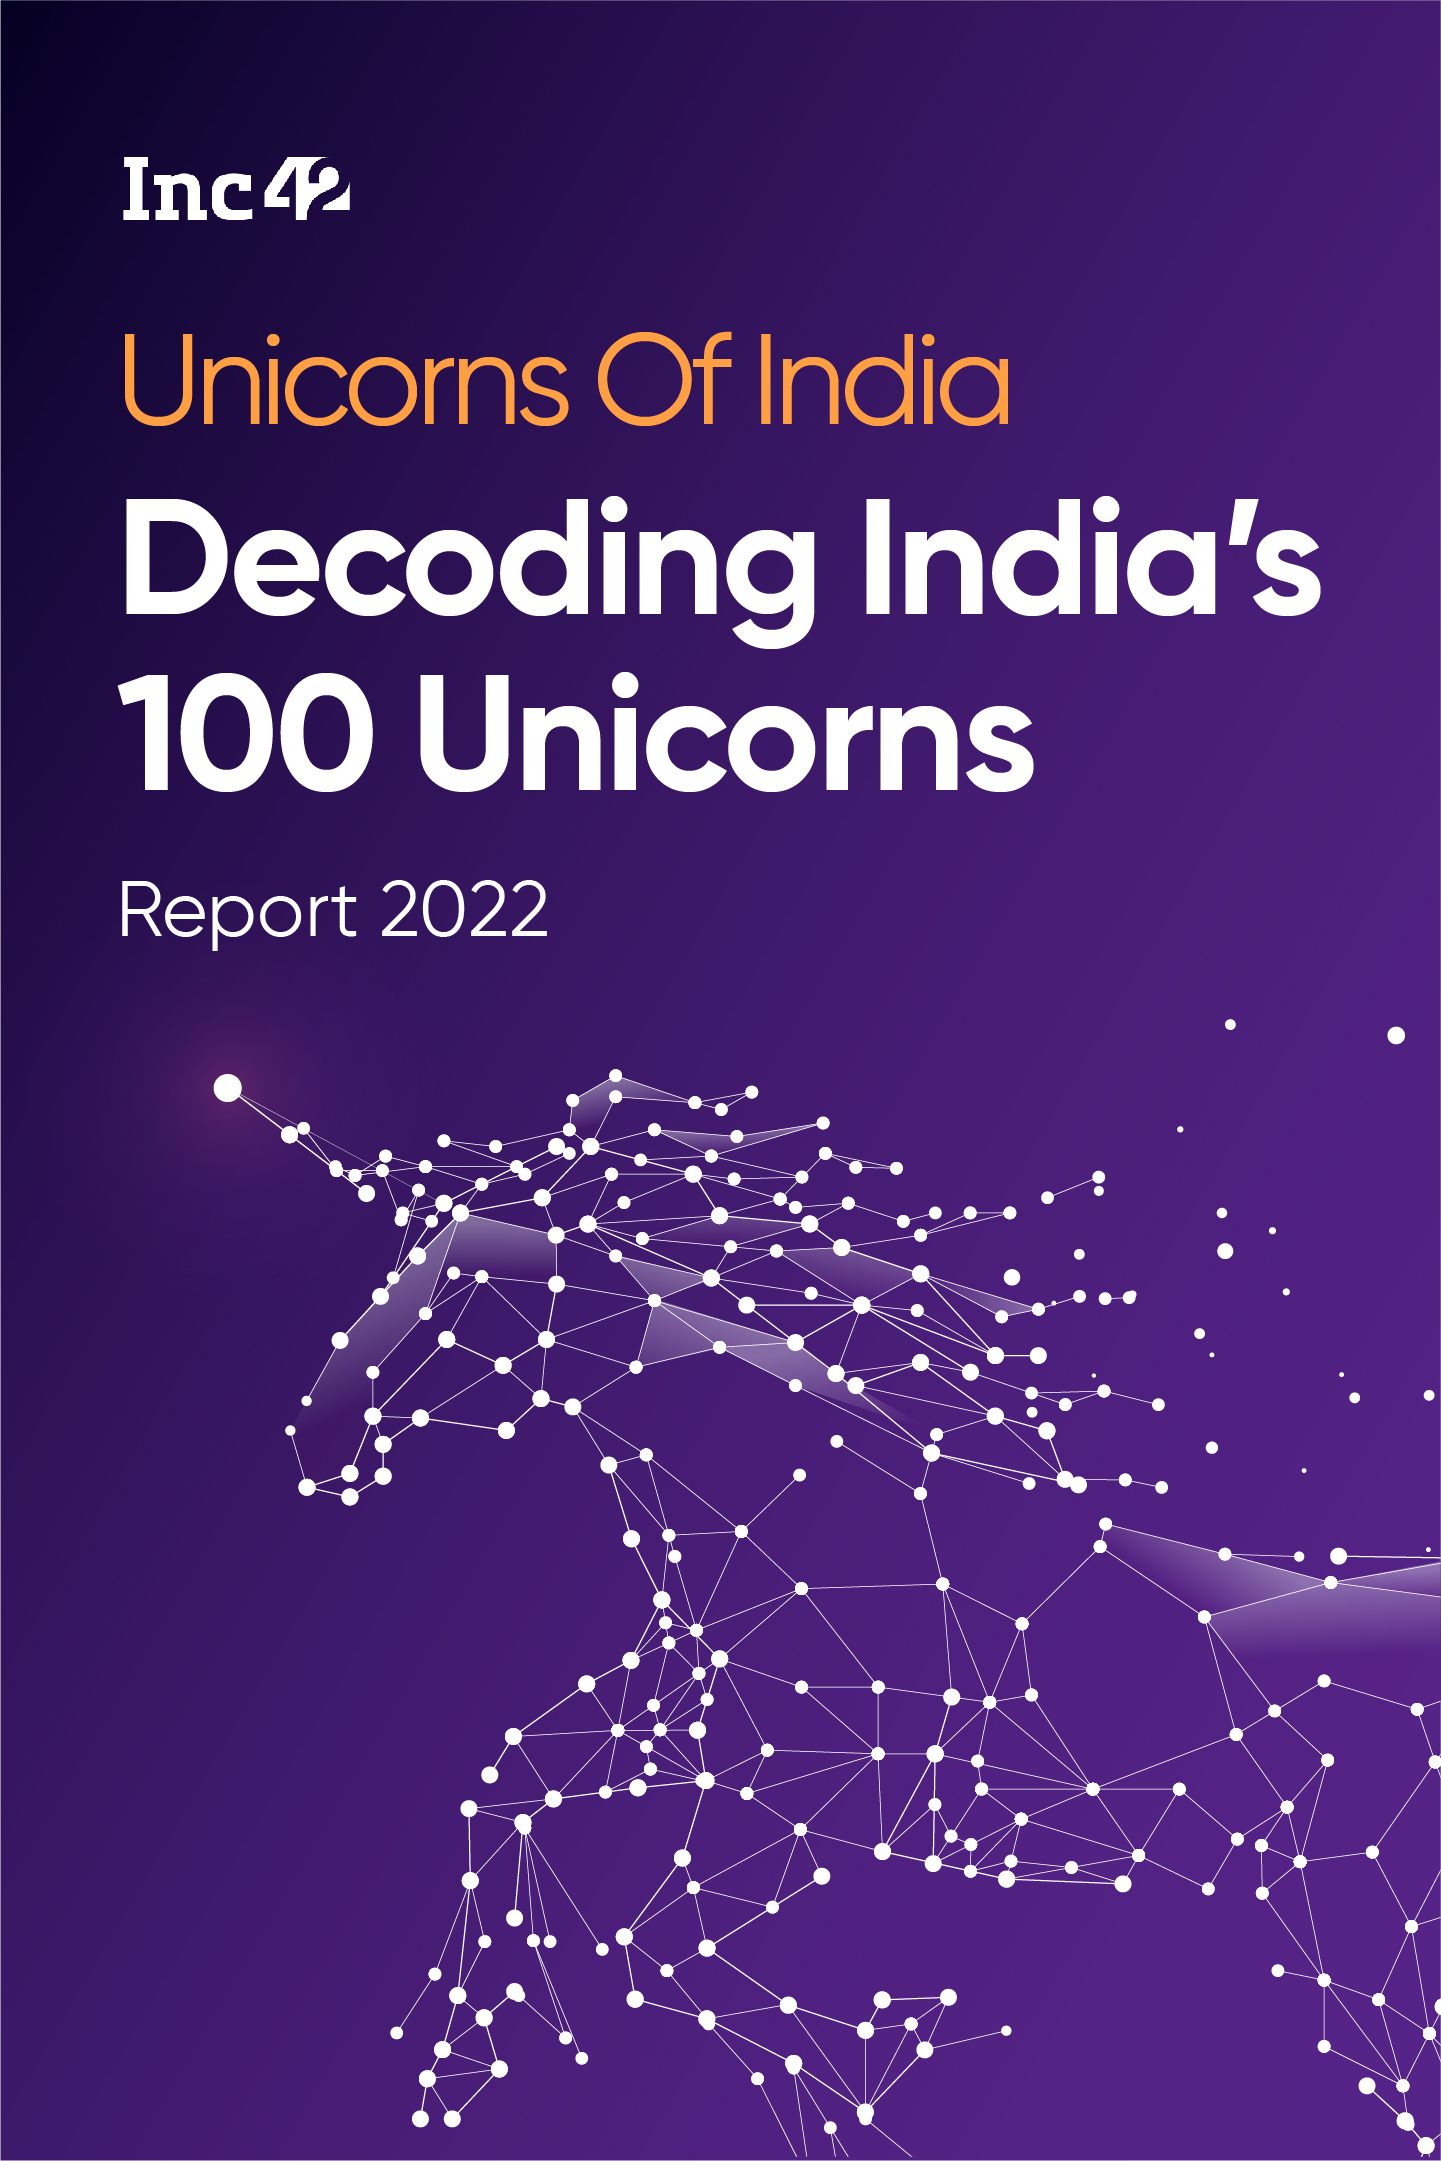 Unicorns Of India: Decoding India’s 100 Unicorns Report 2022